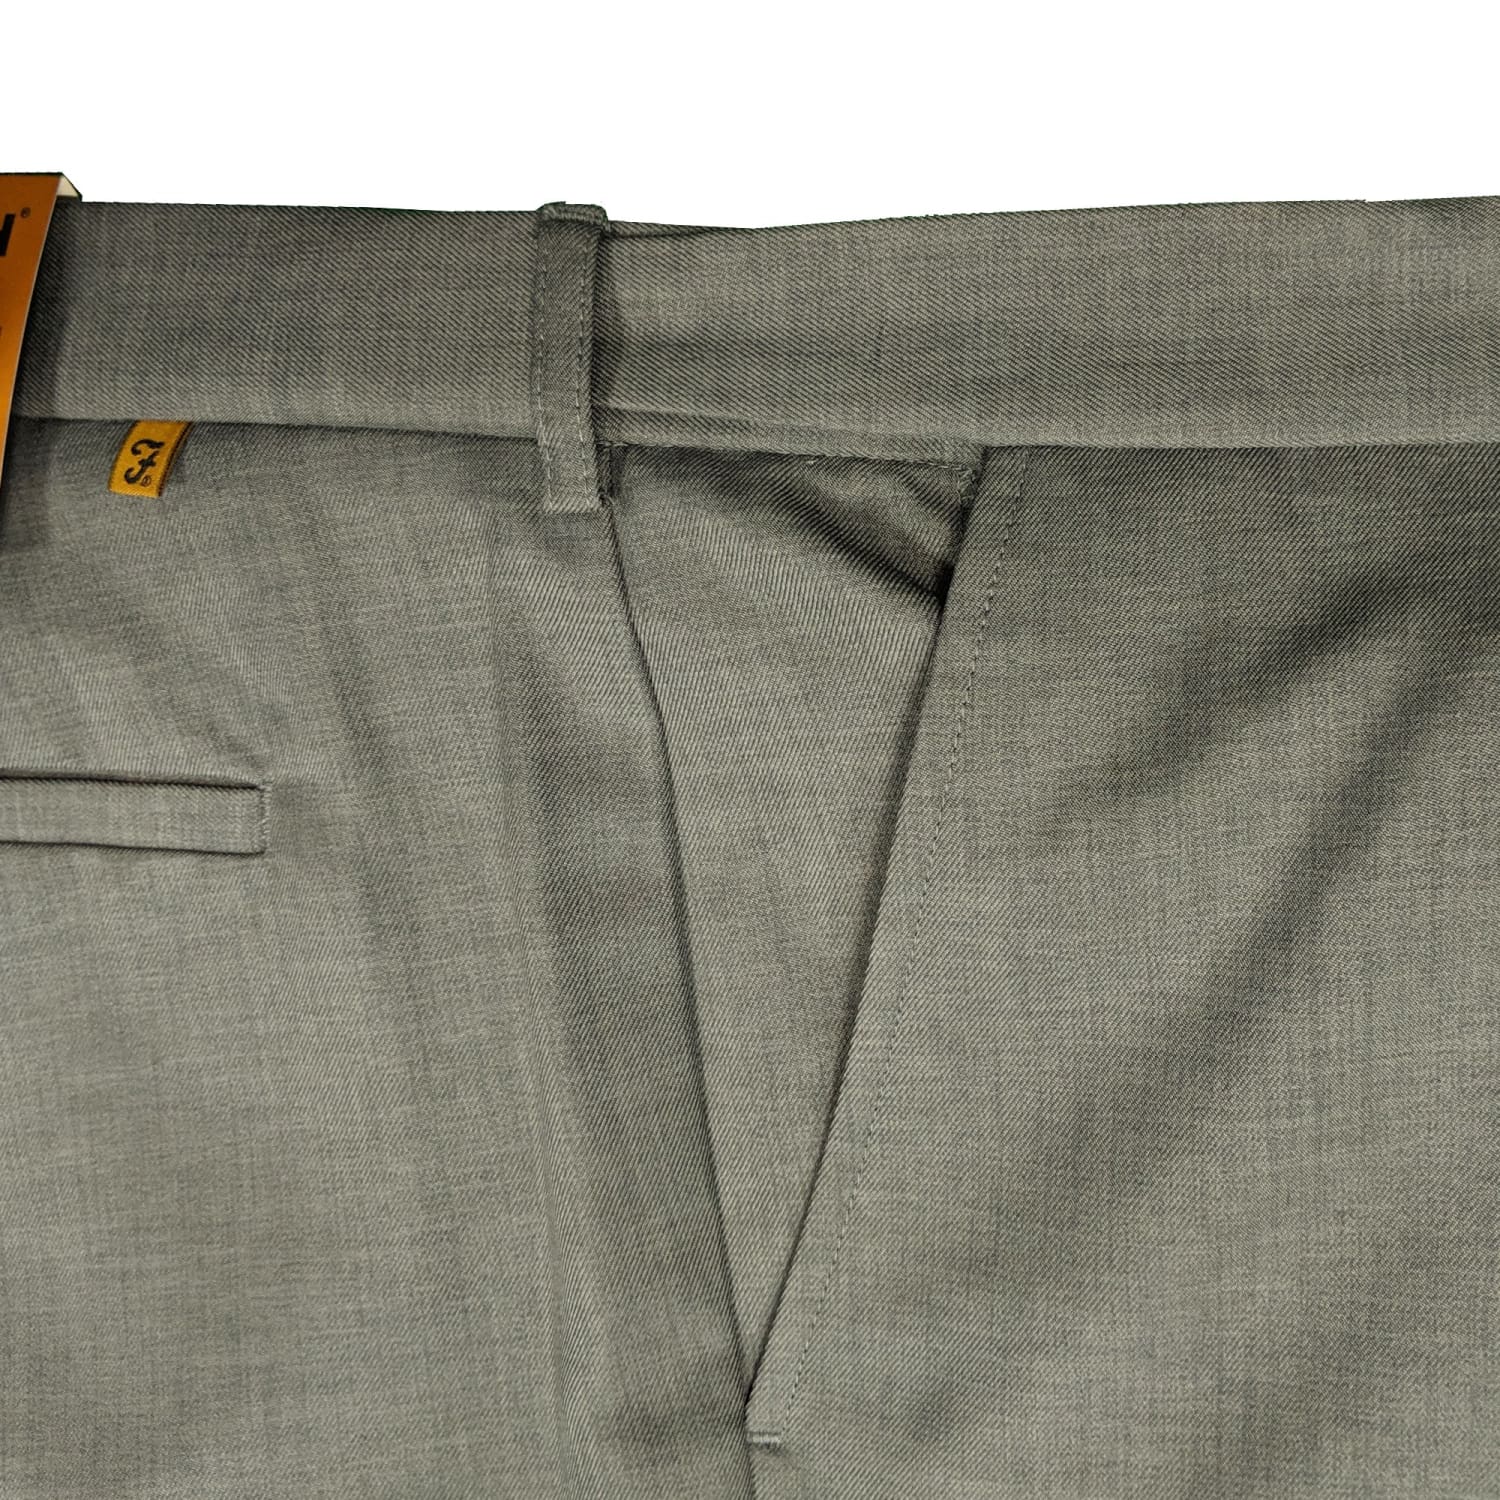 vintage farah trousers Off 62 wwwyesilkoyvetcom